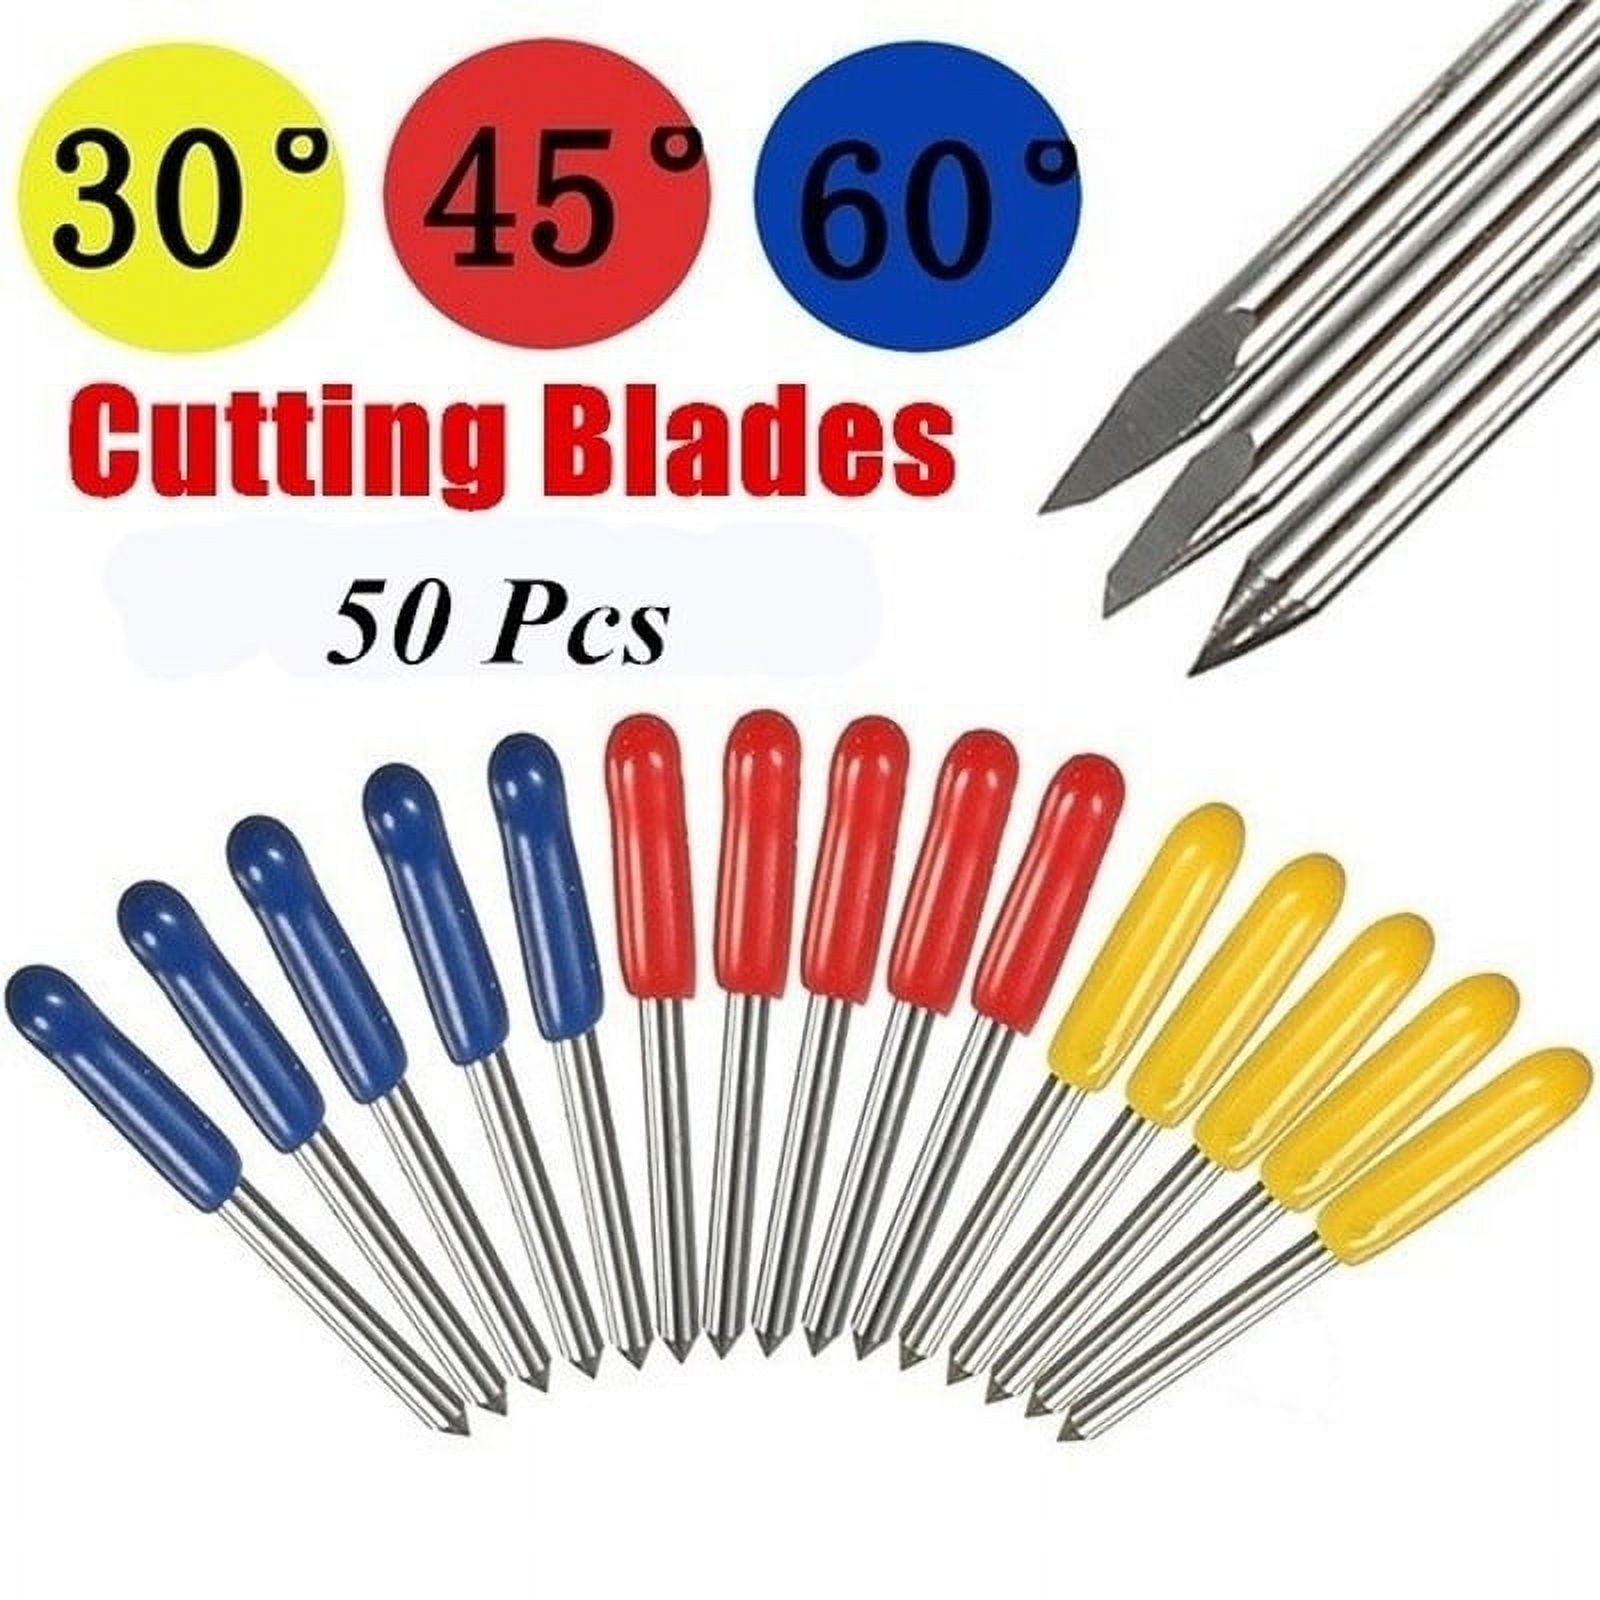 15 Pcs Replacement Blades for Cricut Explore Air 2 Vinyl Cutting Machines,  30/45/60 Degree Cutting Blades for Cricut